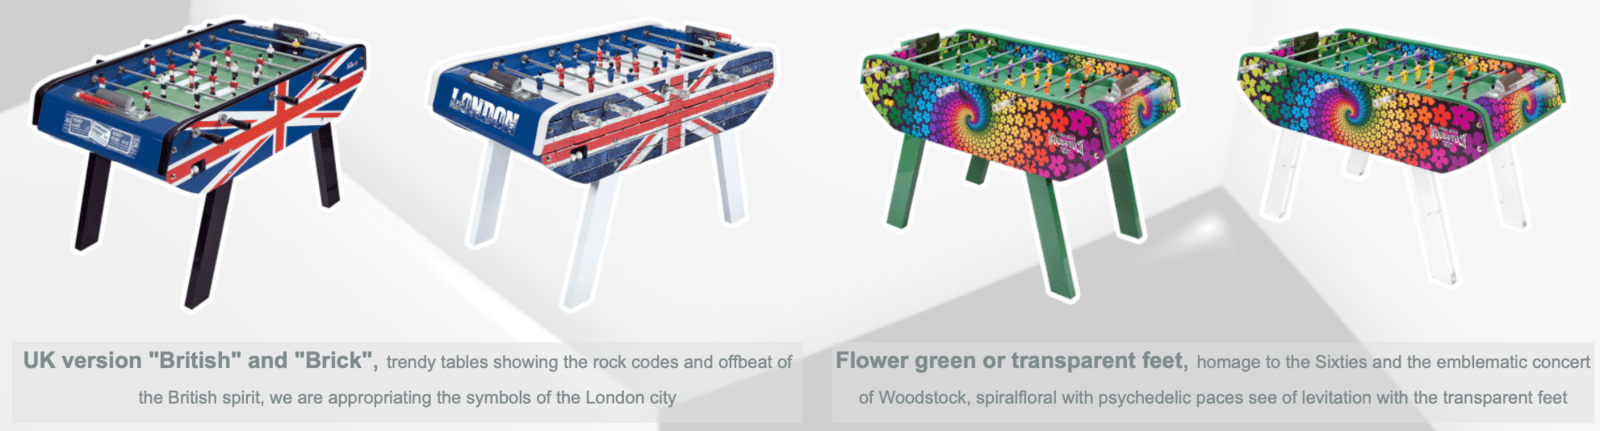 UK "British" and "Brick" version or Flower green or transparent feet